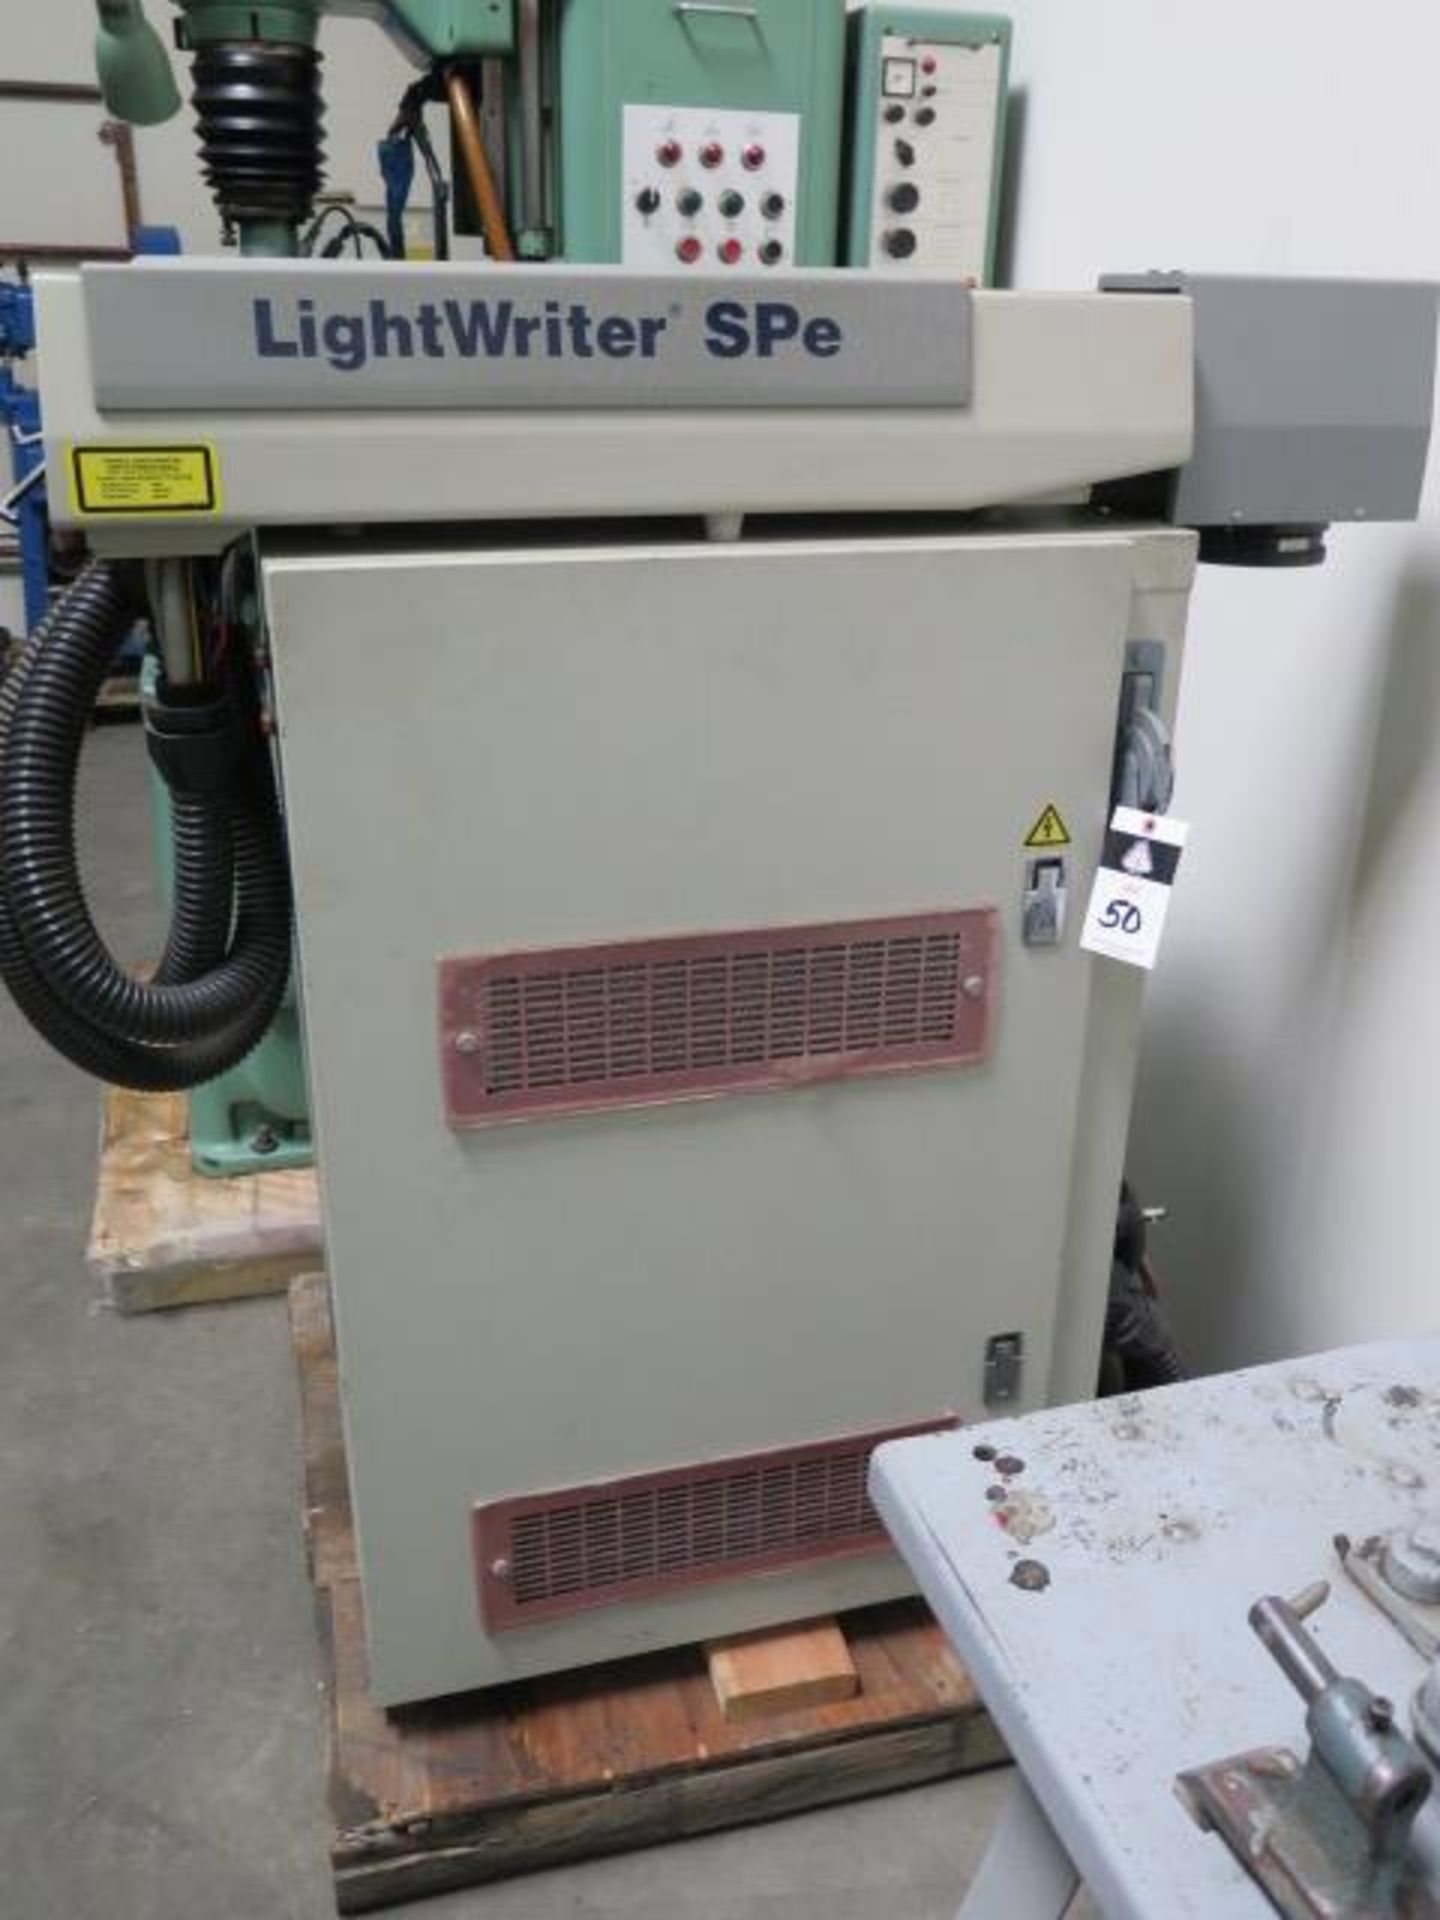 Lumonics "Light Writer Spe" Laser Engraving System w/ Lumonics Controls (SOLD AS-IS - NO WARRANTY) - Image 2 of 8